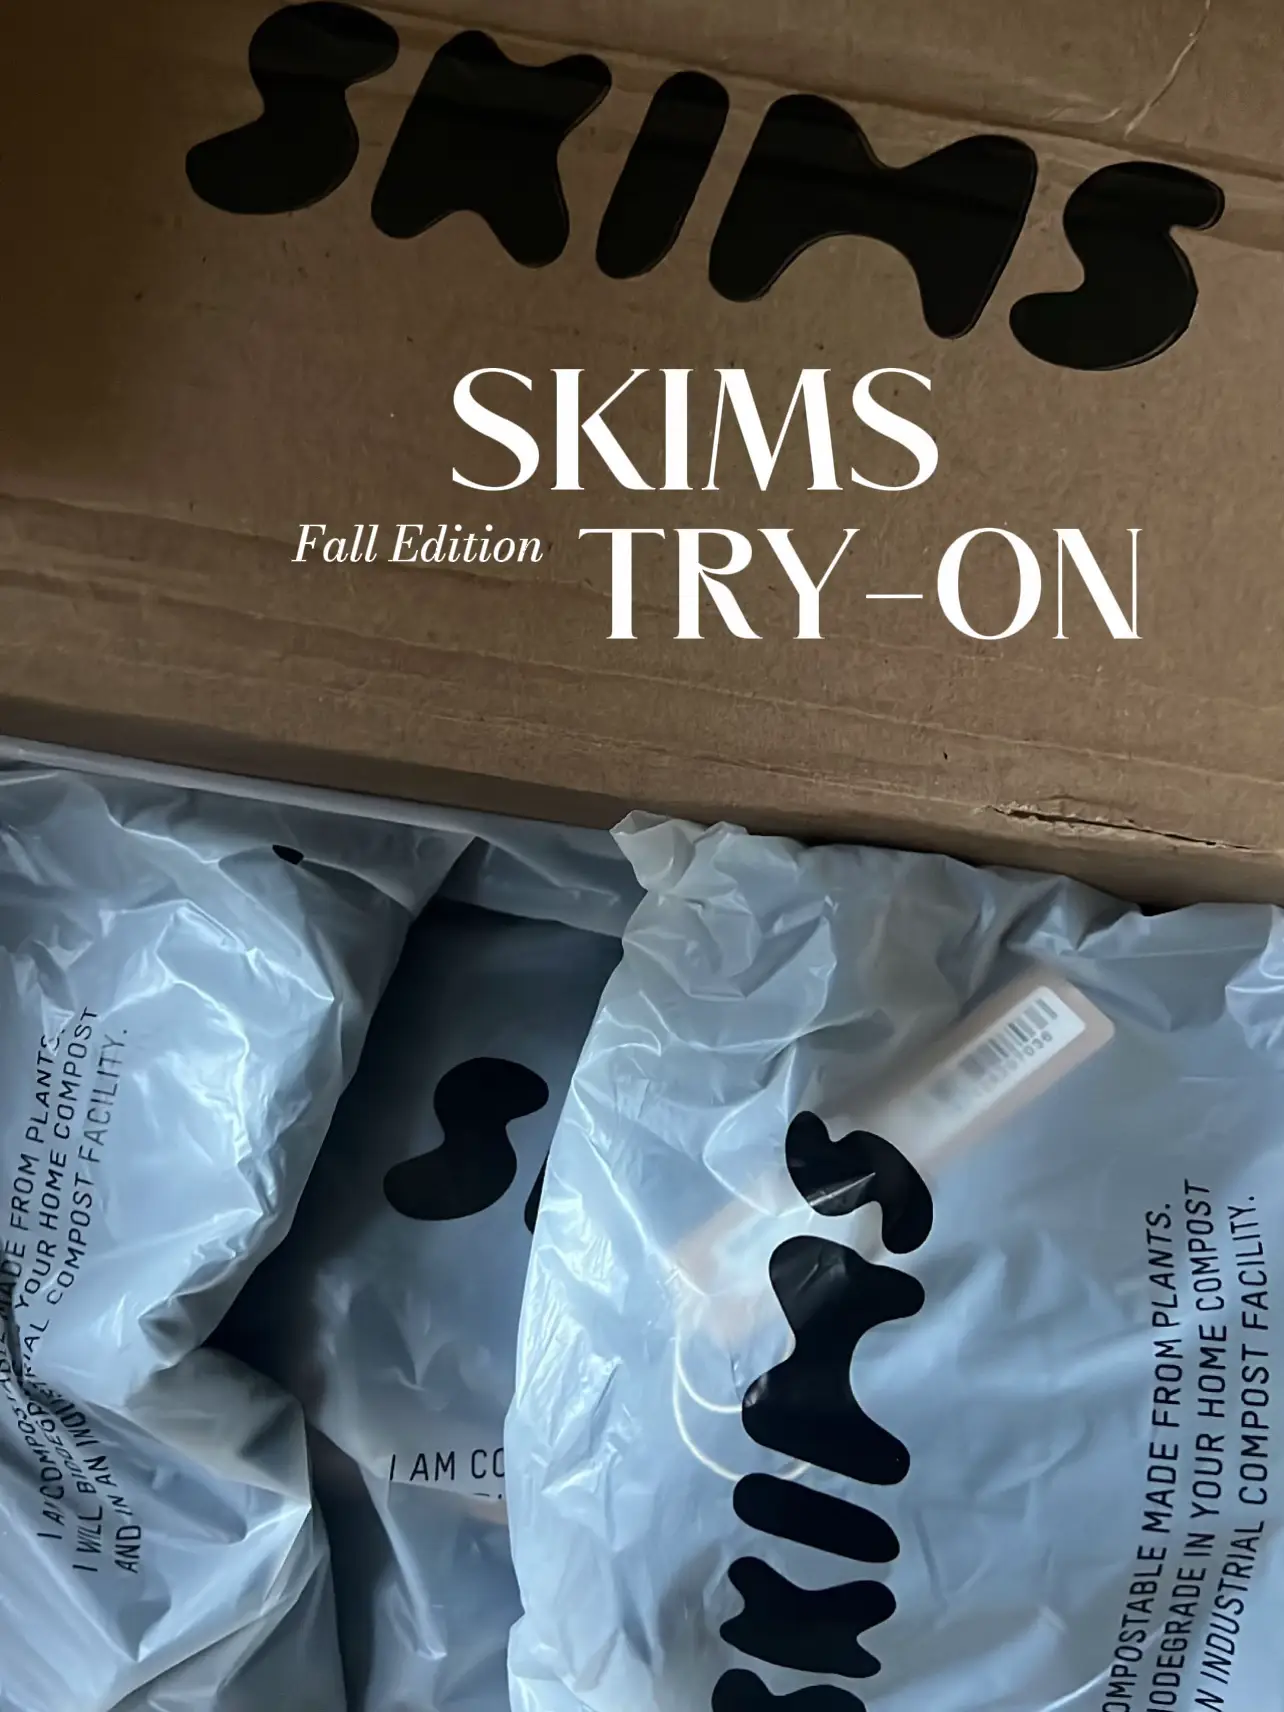 SKIMS TRY-ON, Gallery posted by Chloe Kapisak